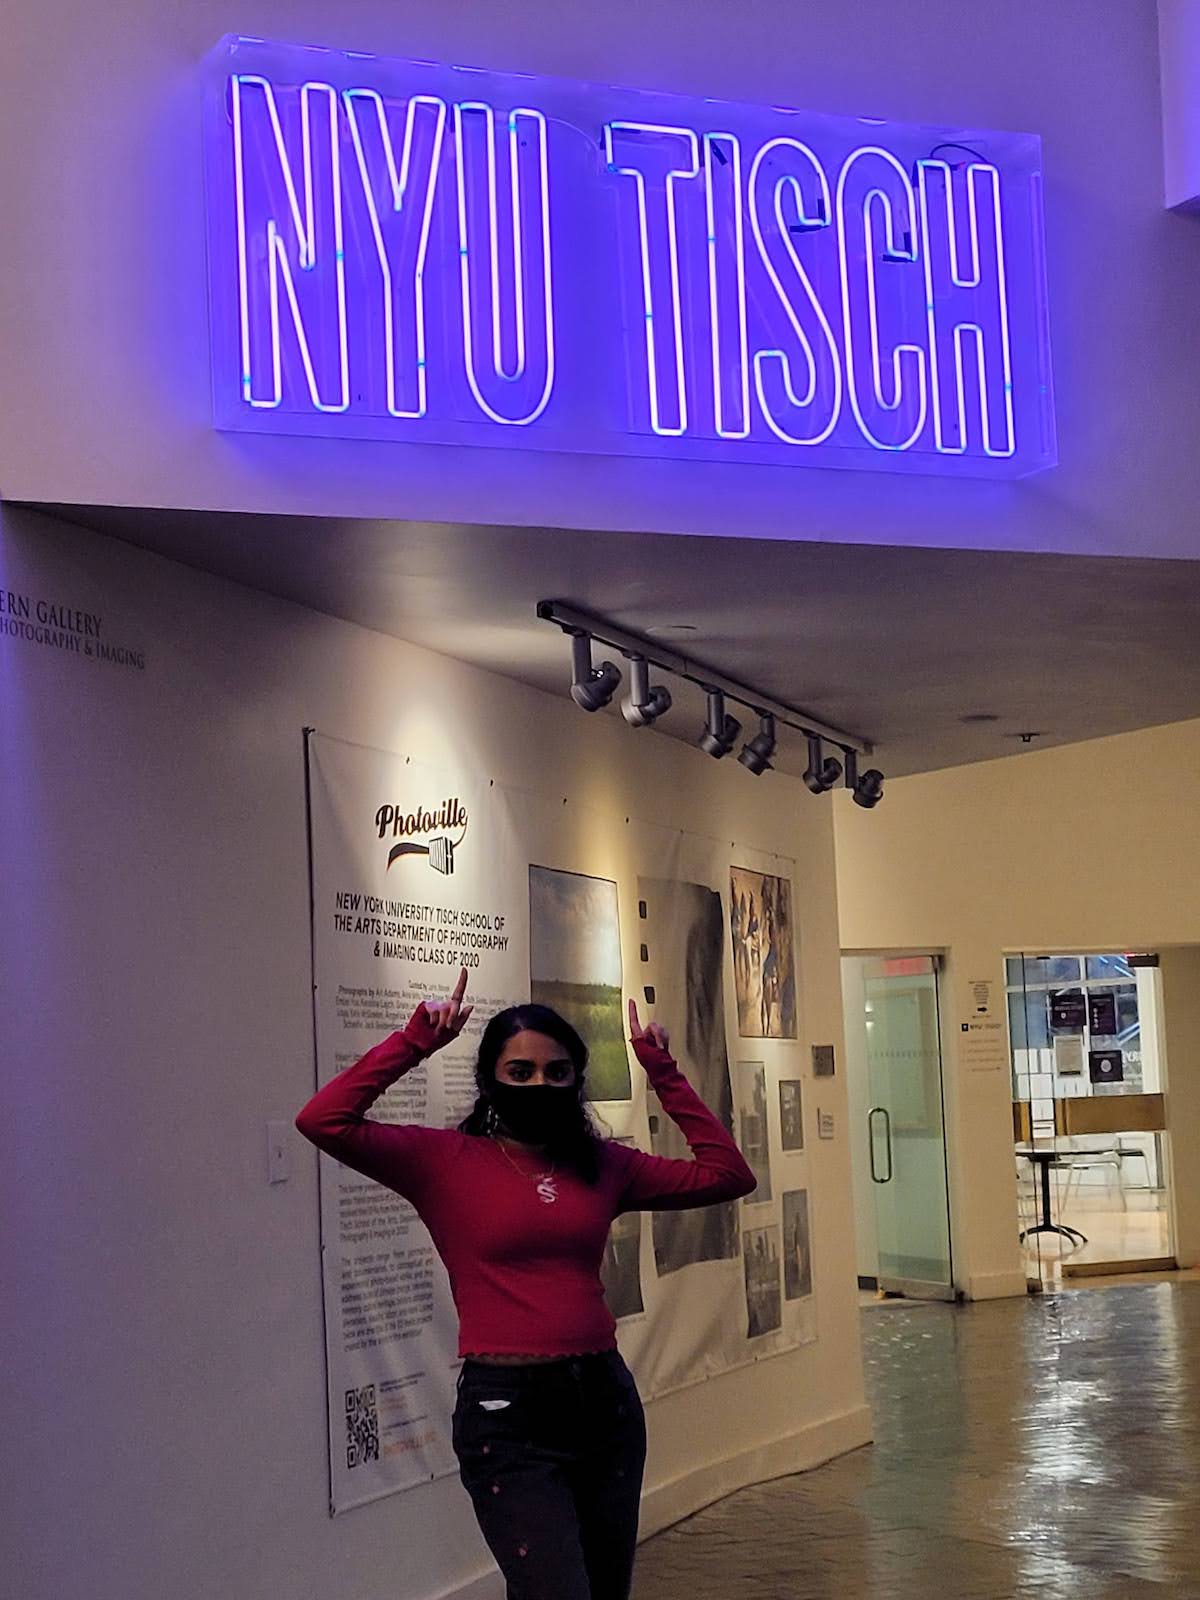 Eshika at NYU Tisch pointing to the Tisch sign.